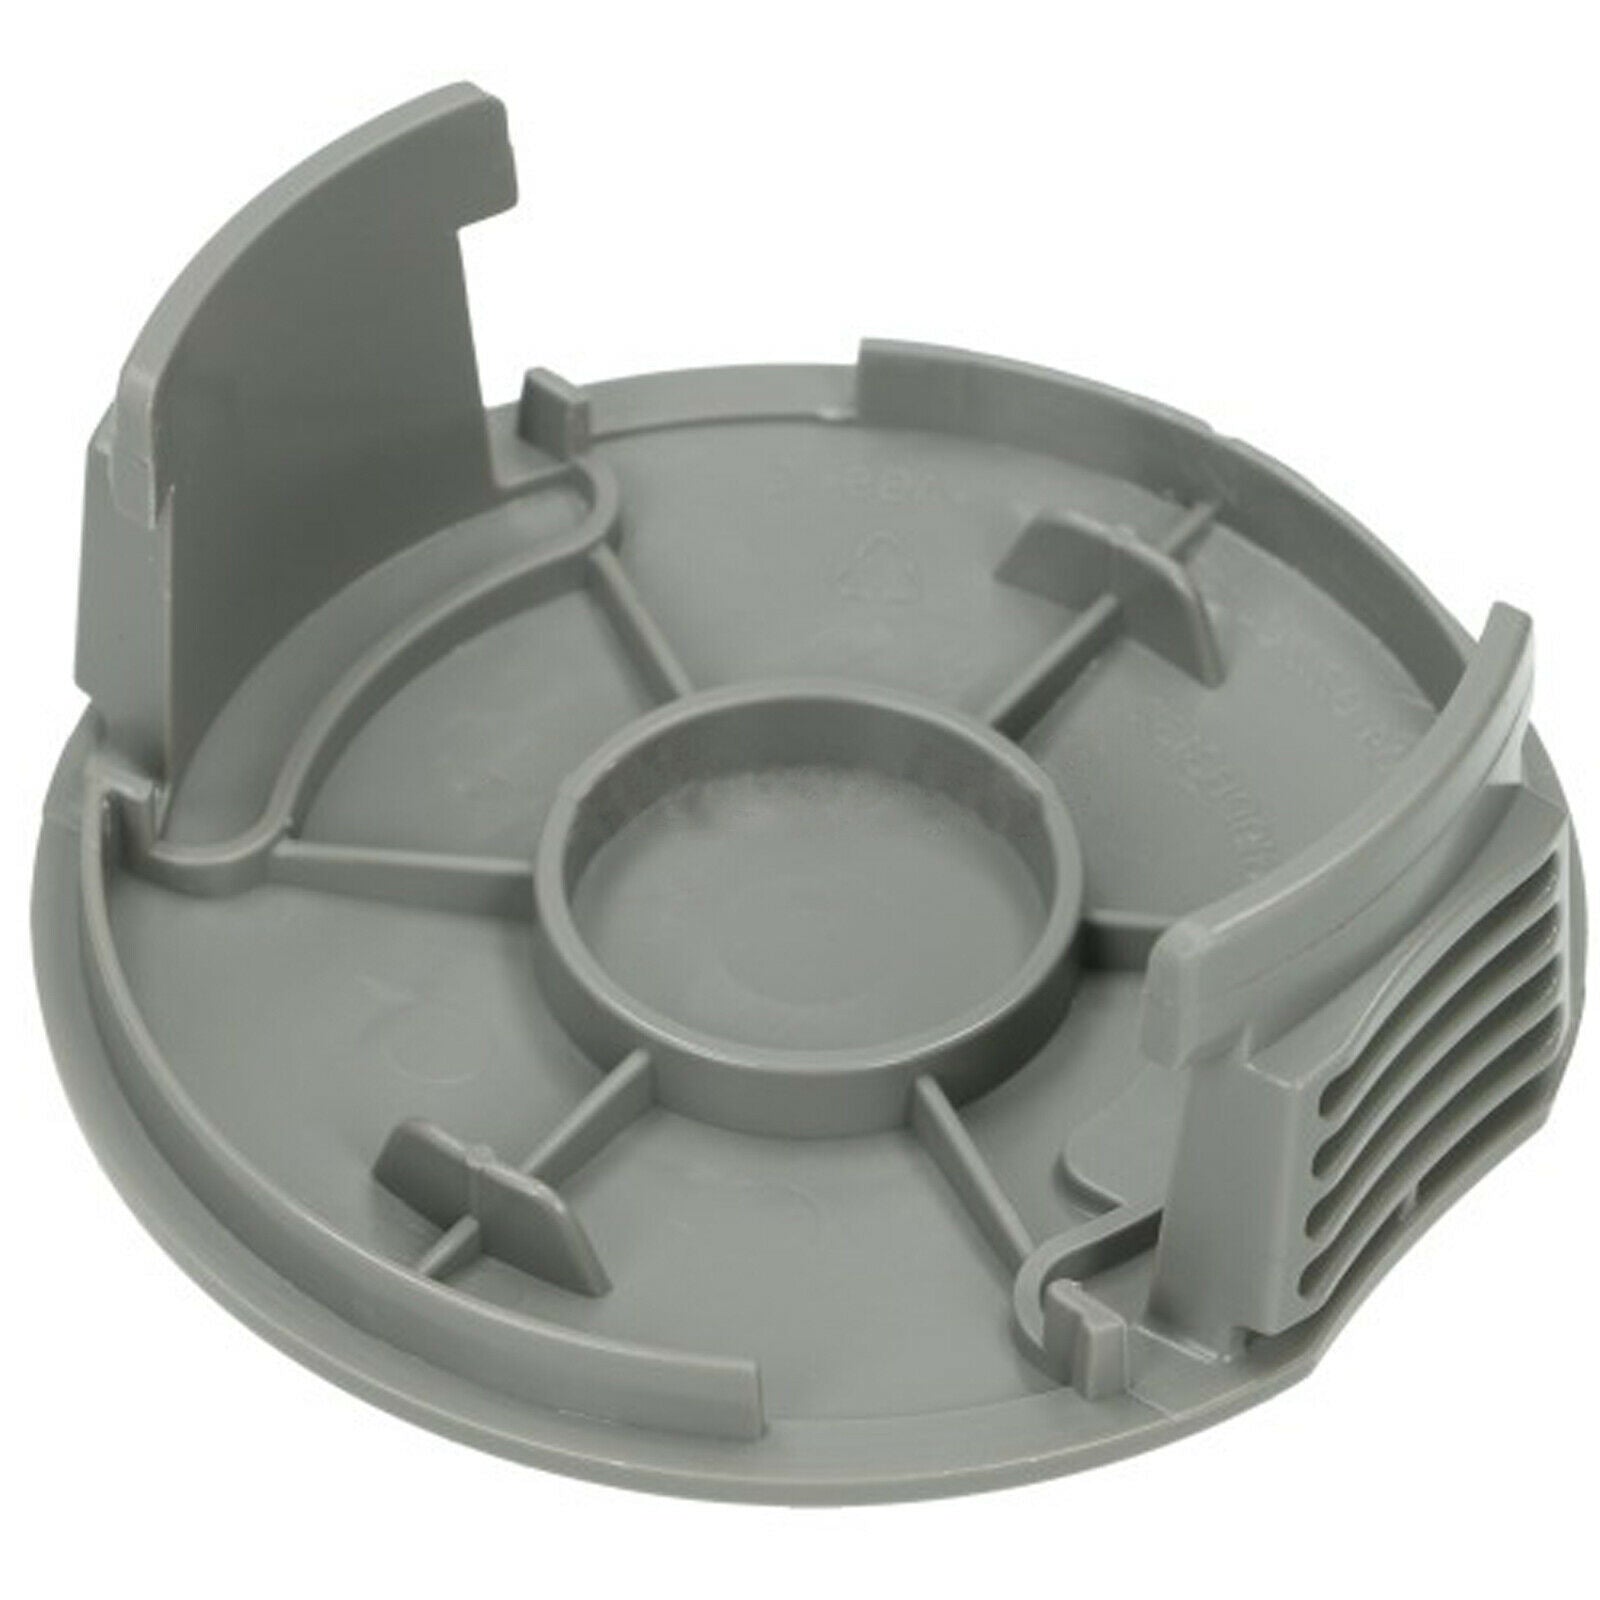 Bosch Strimmer Spool Cover Trimmer Cap EasyGrassCut 18-230 18-26 18-260 23 26 x 2